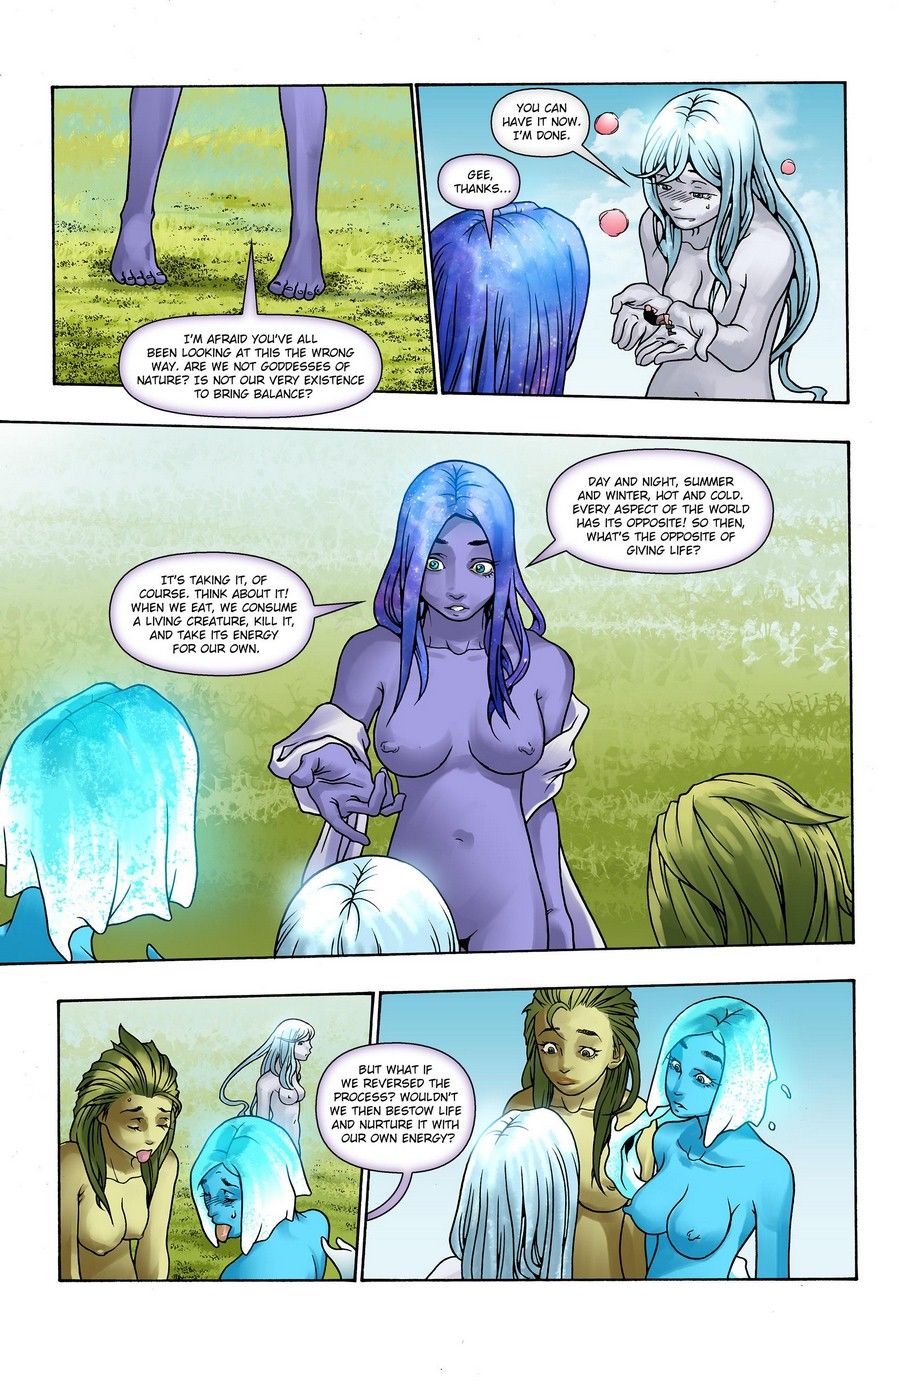 Visiting Eden - Giantness Fan page 14